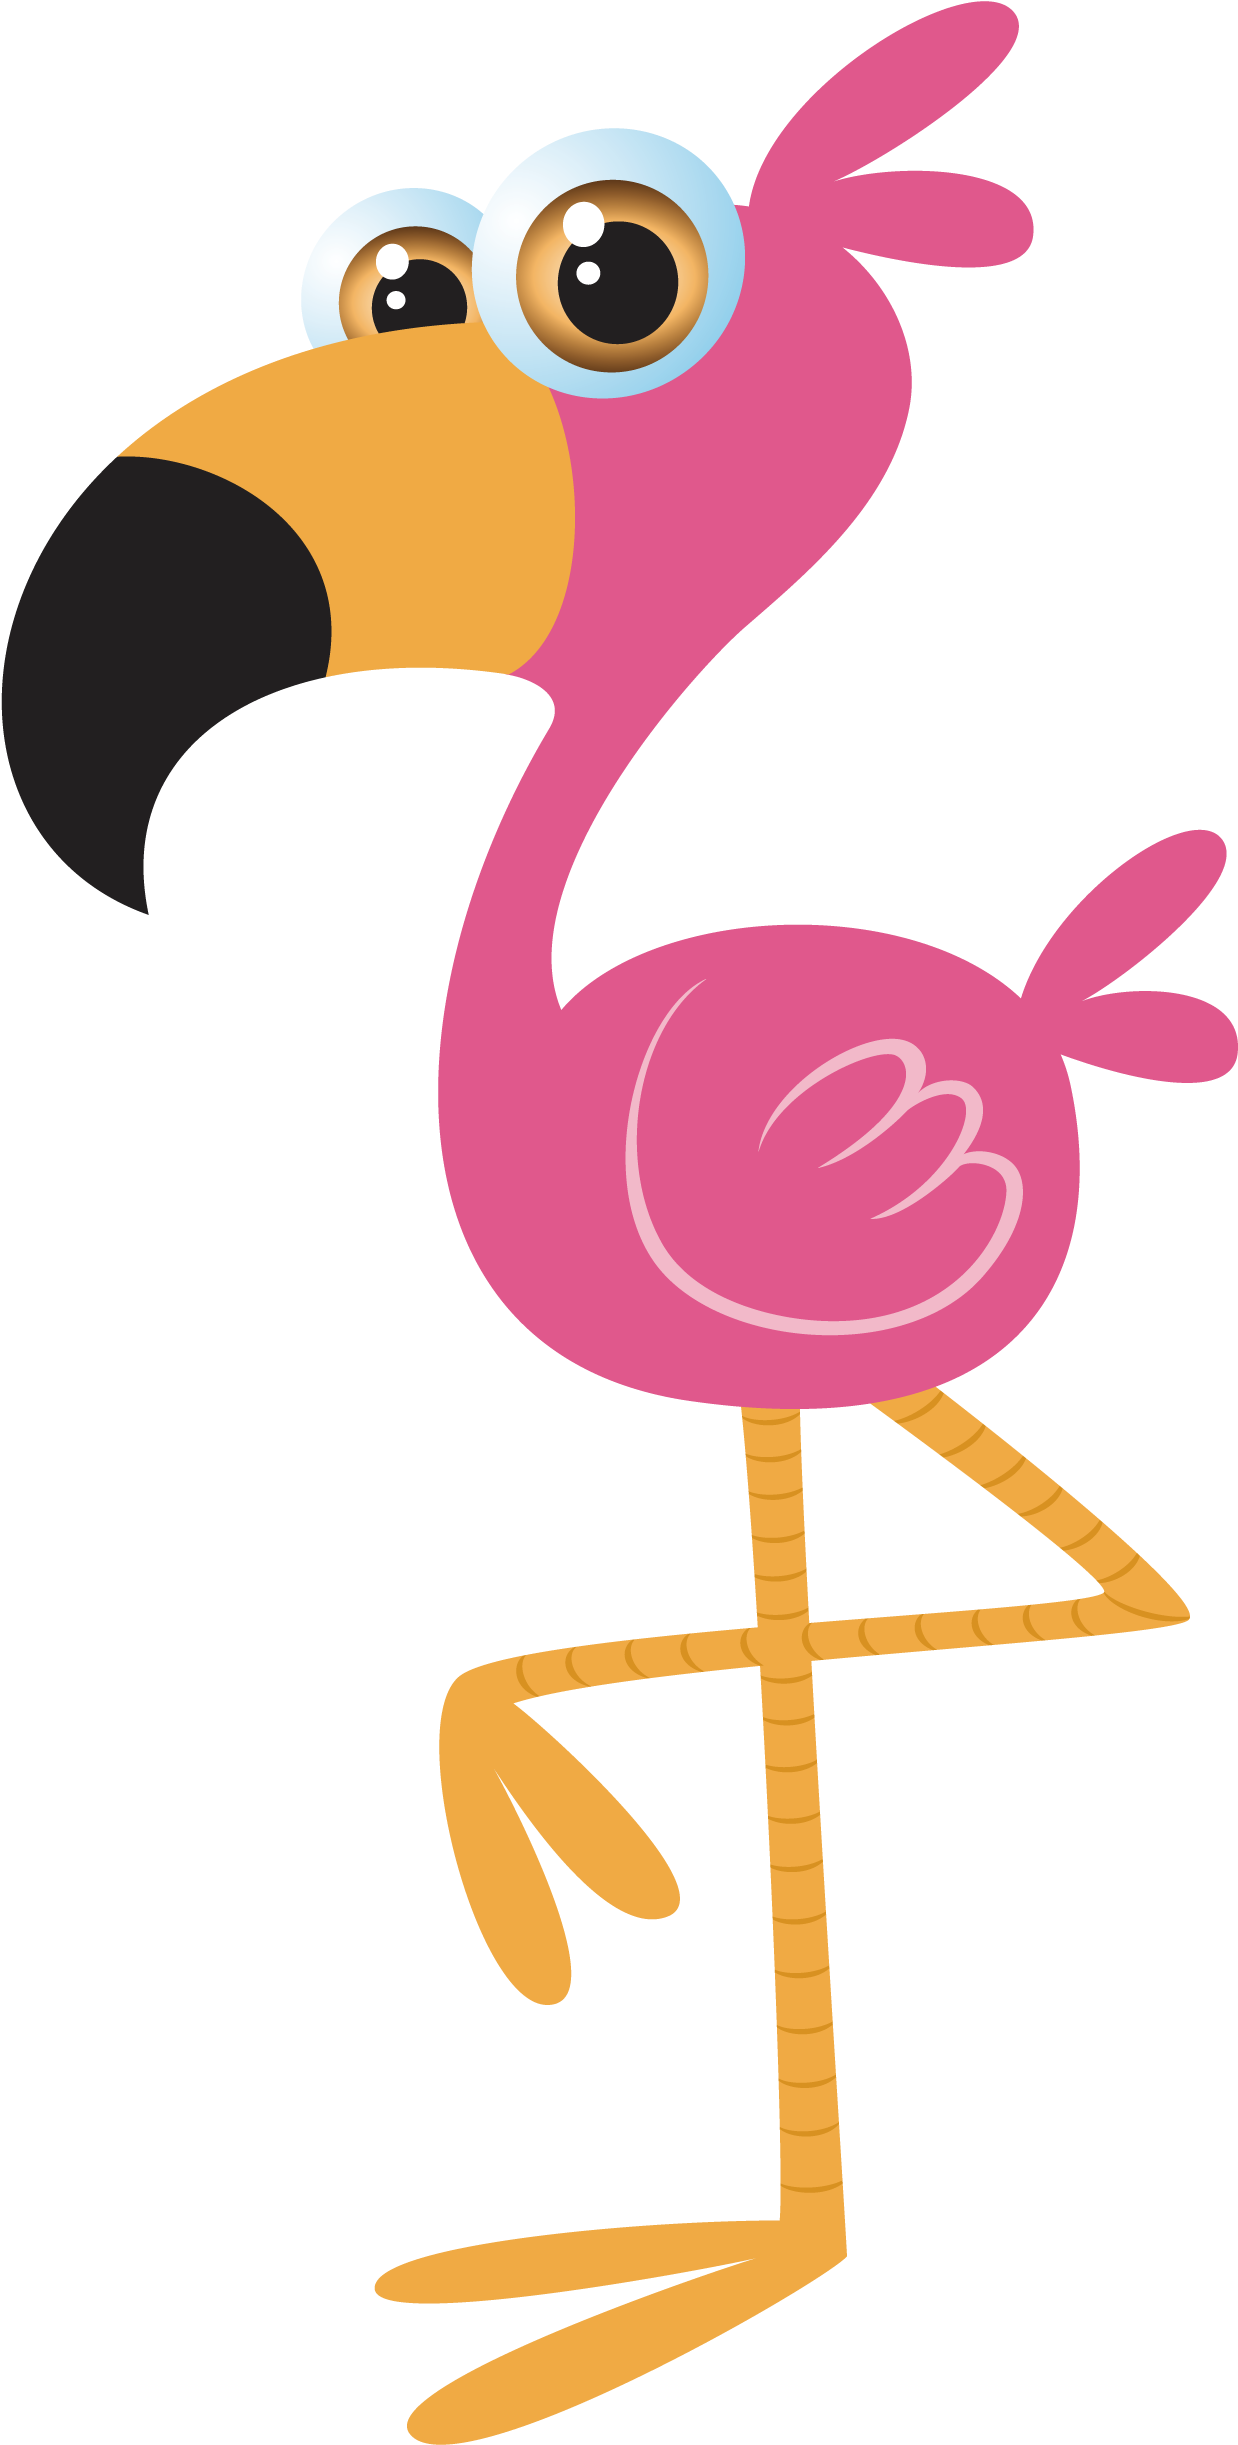 Bird Cartoon Illustration - Bird Cartoon Illustration (2500x2500)